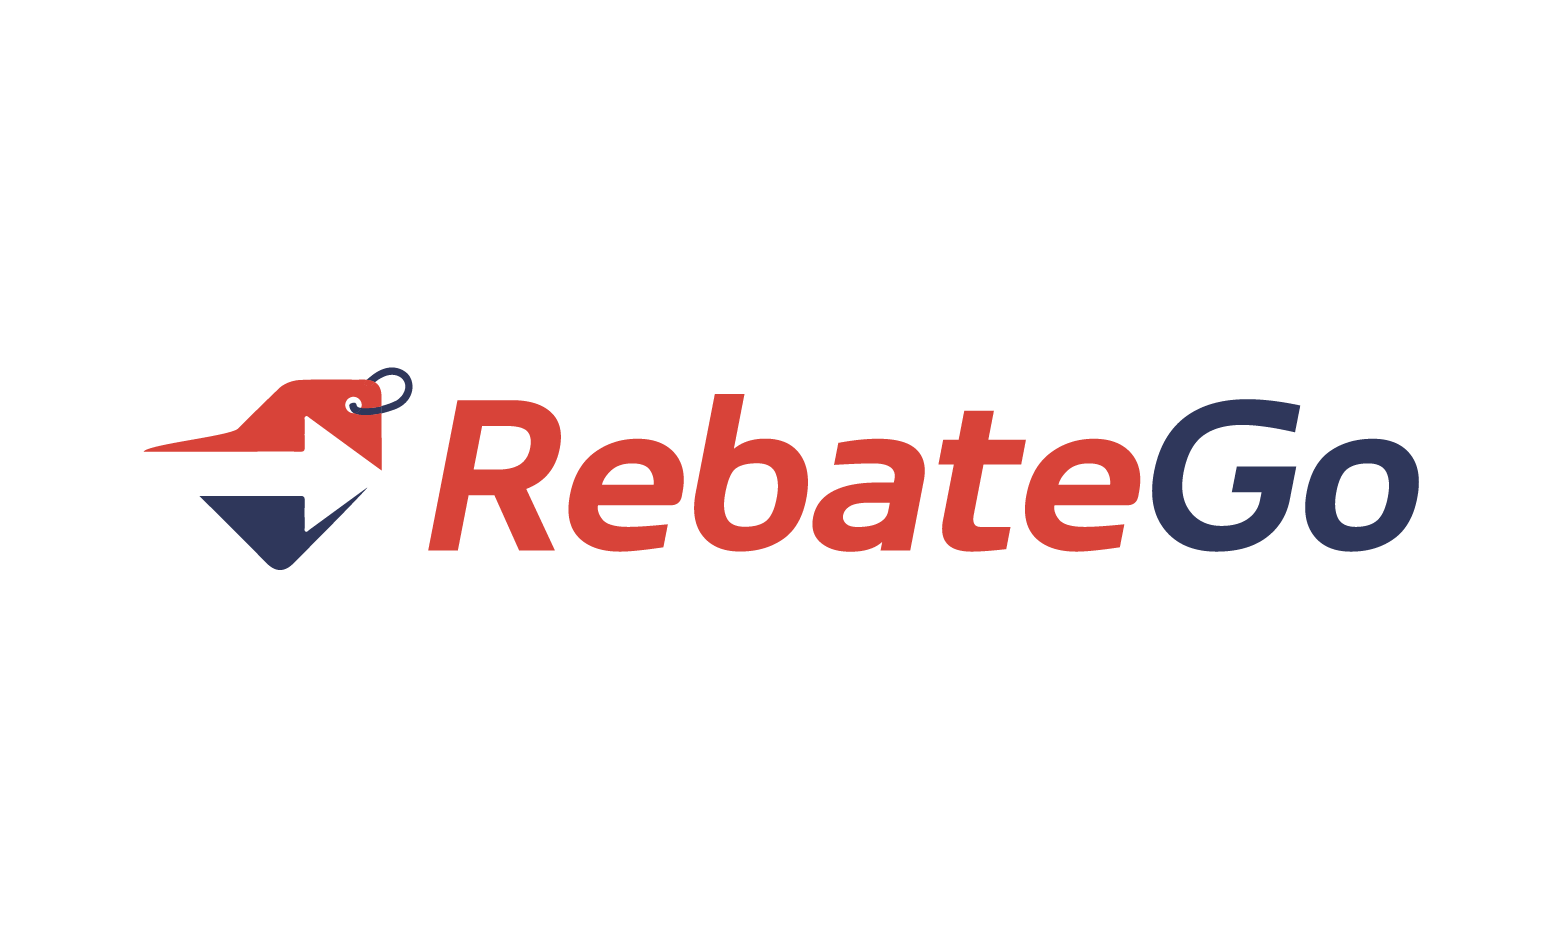 RebateGo.com - Creative brandable domain for sale